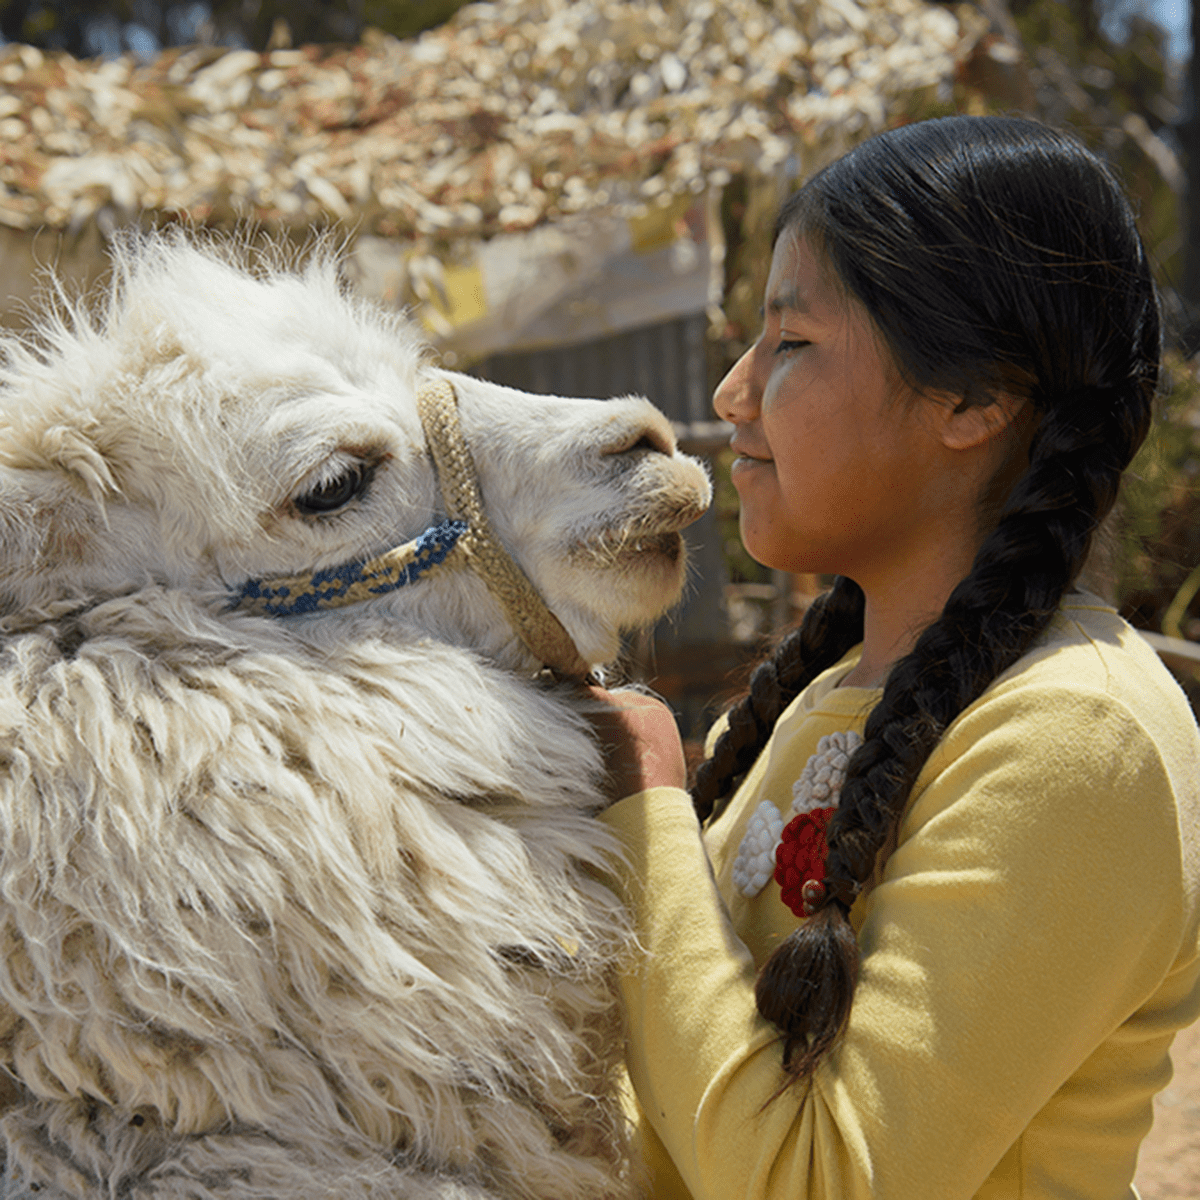 child pets a llama